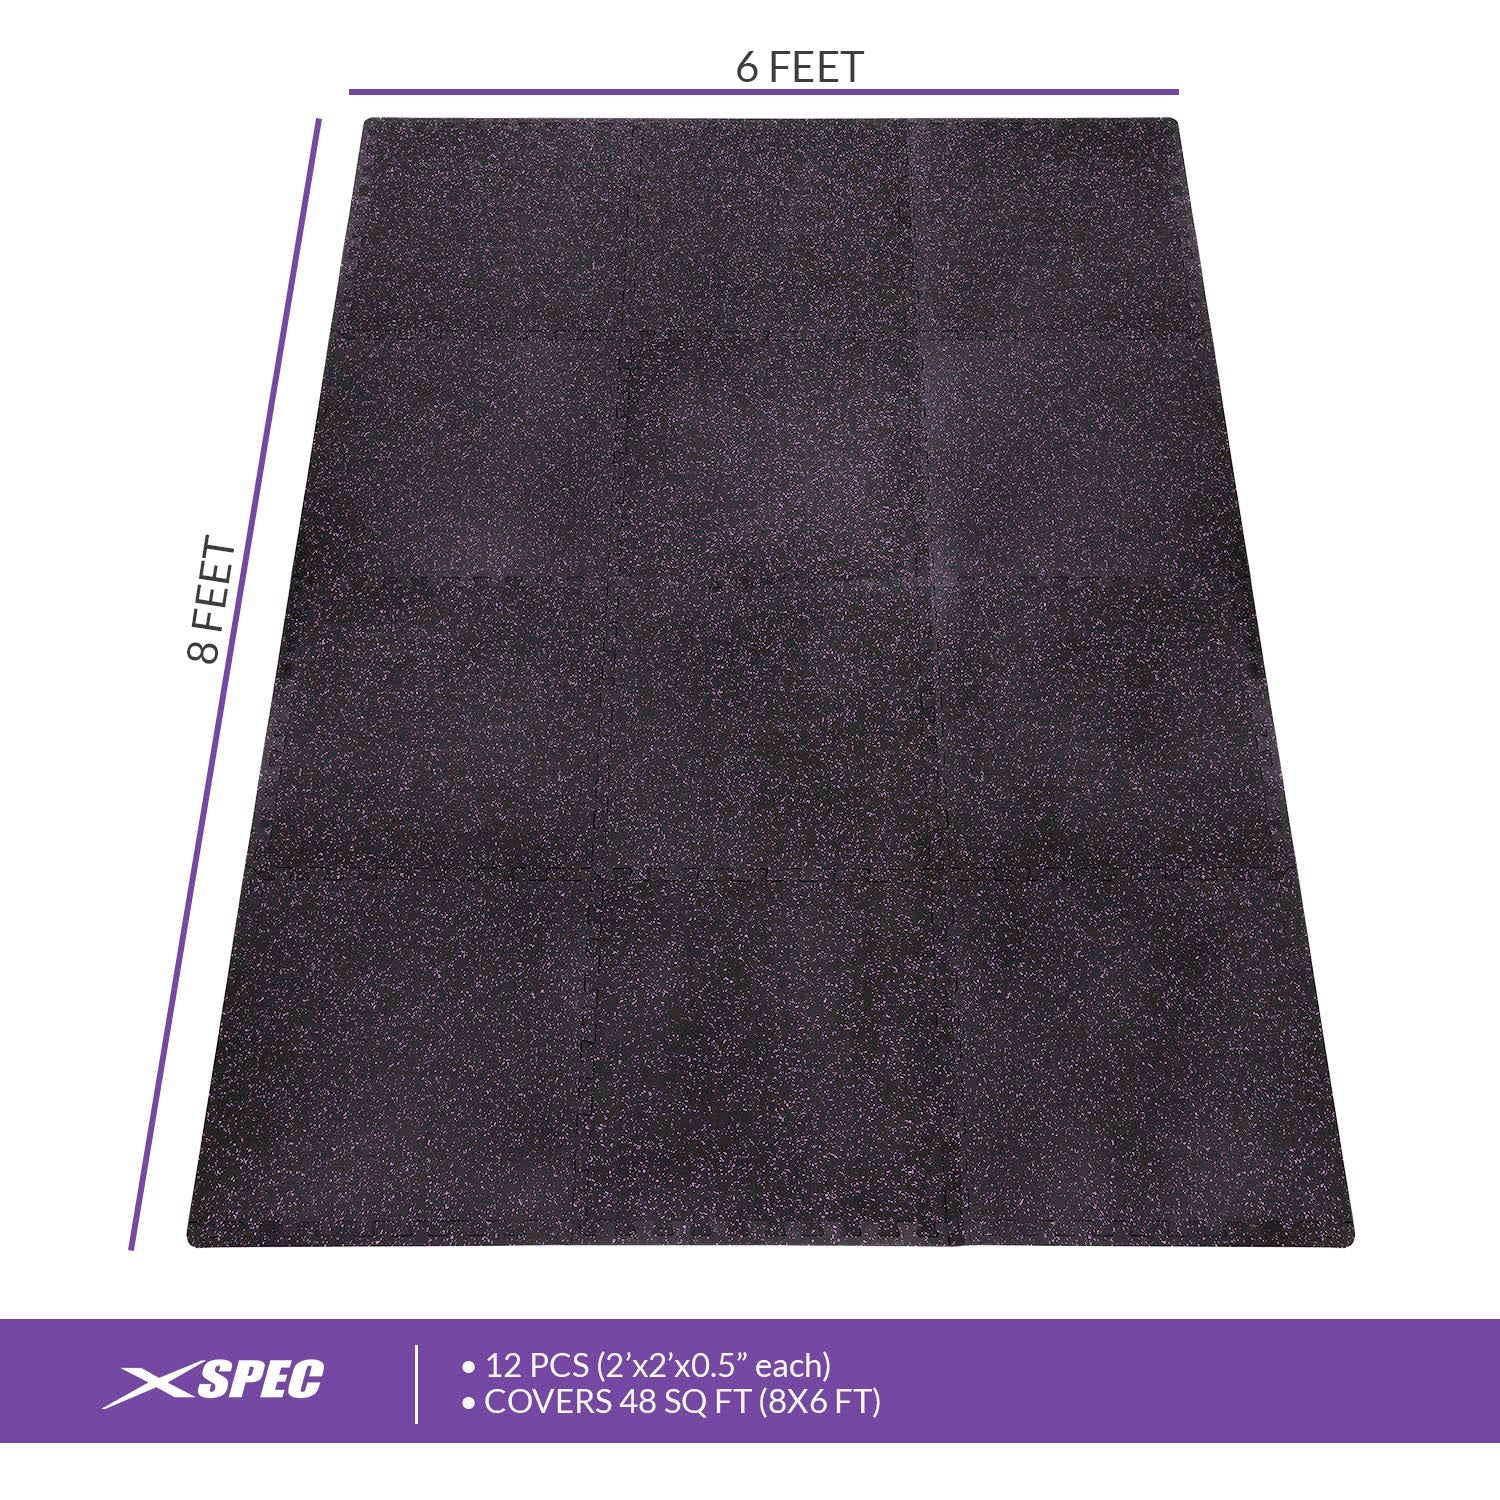 Xspec 1/2 Thick 48 Sq ft Rubber Top Eva Foam Gym Mats 12 Pcs, Purple Black